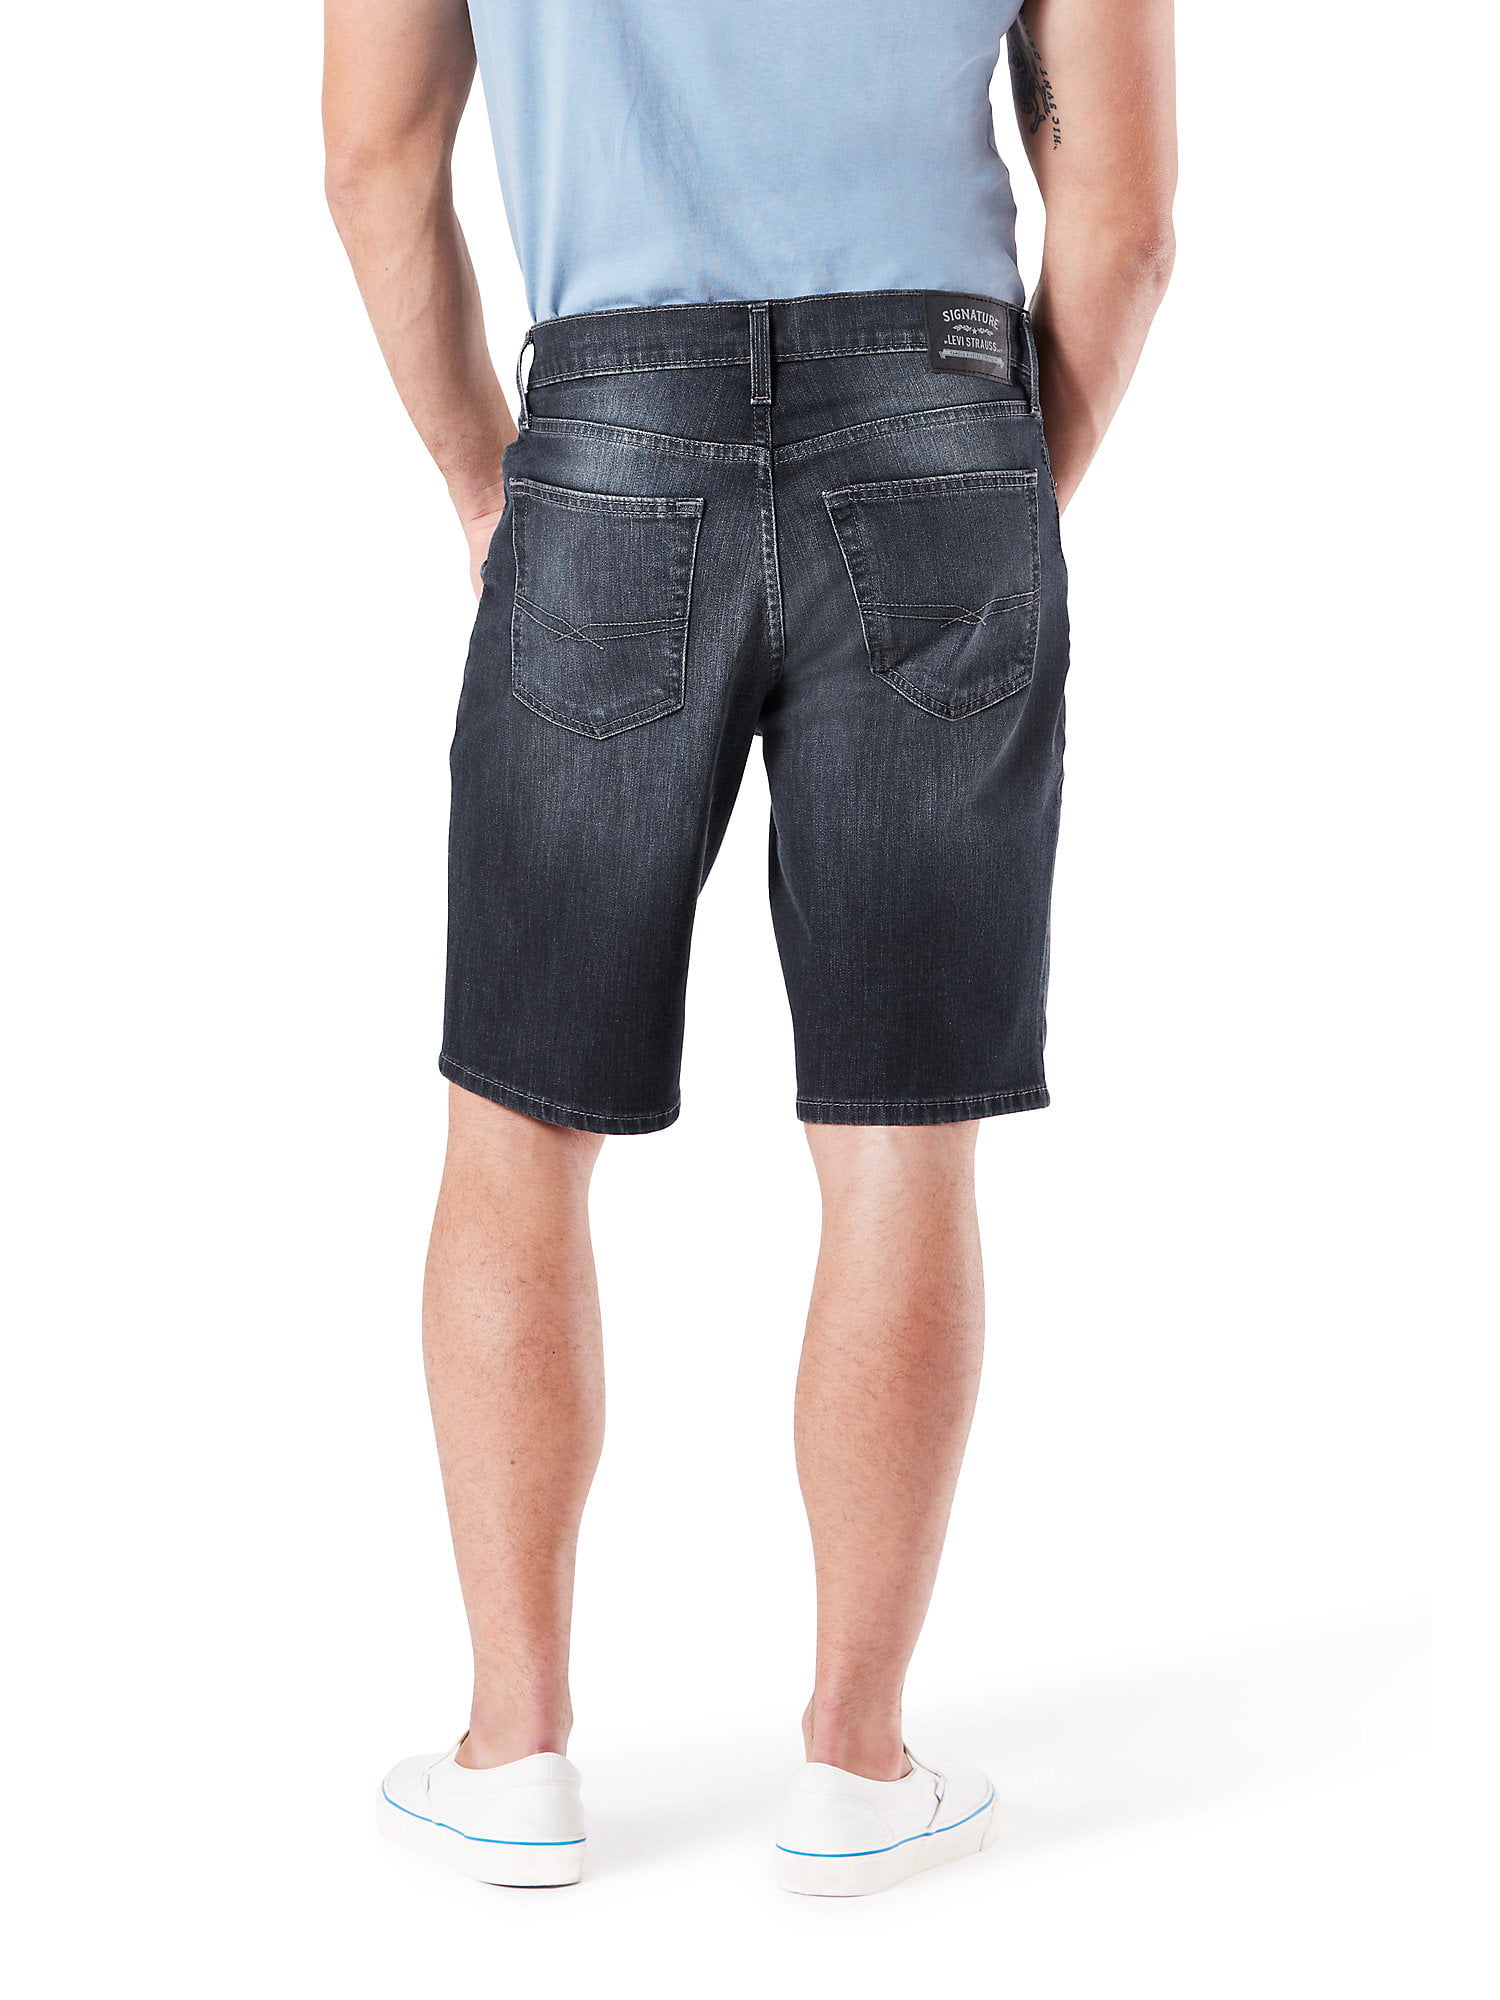 levi strauss signature men's shorts